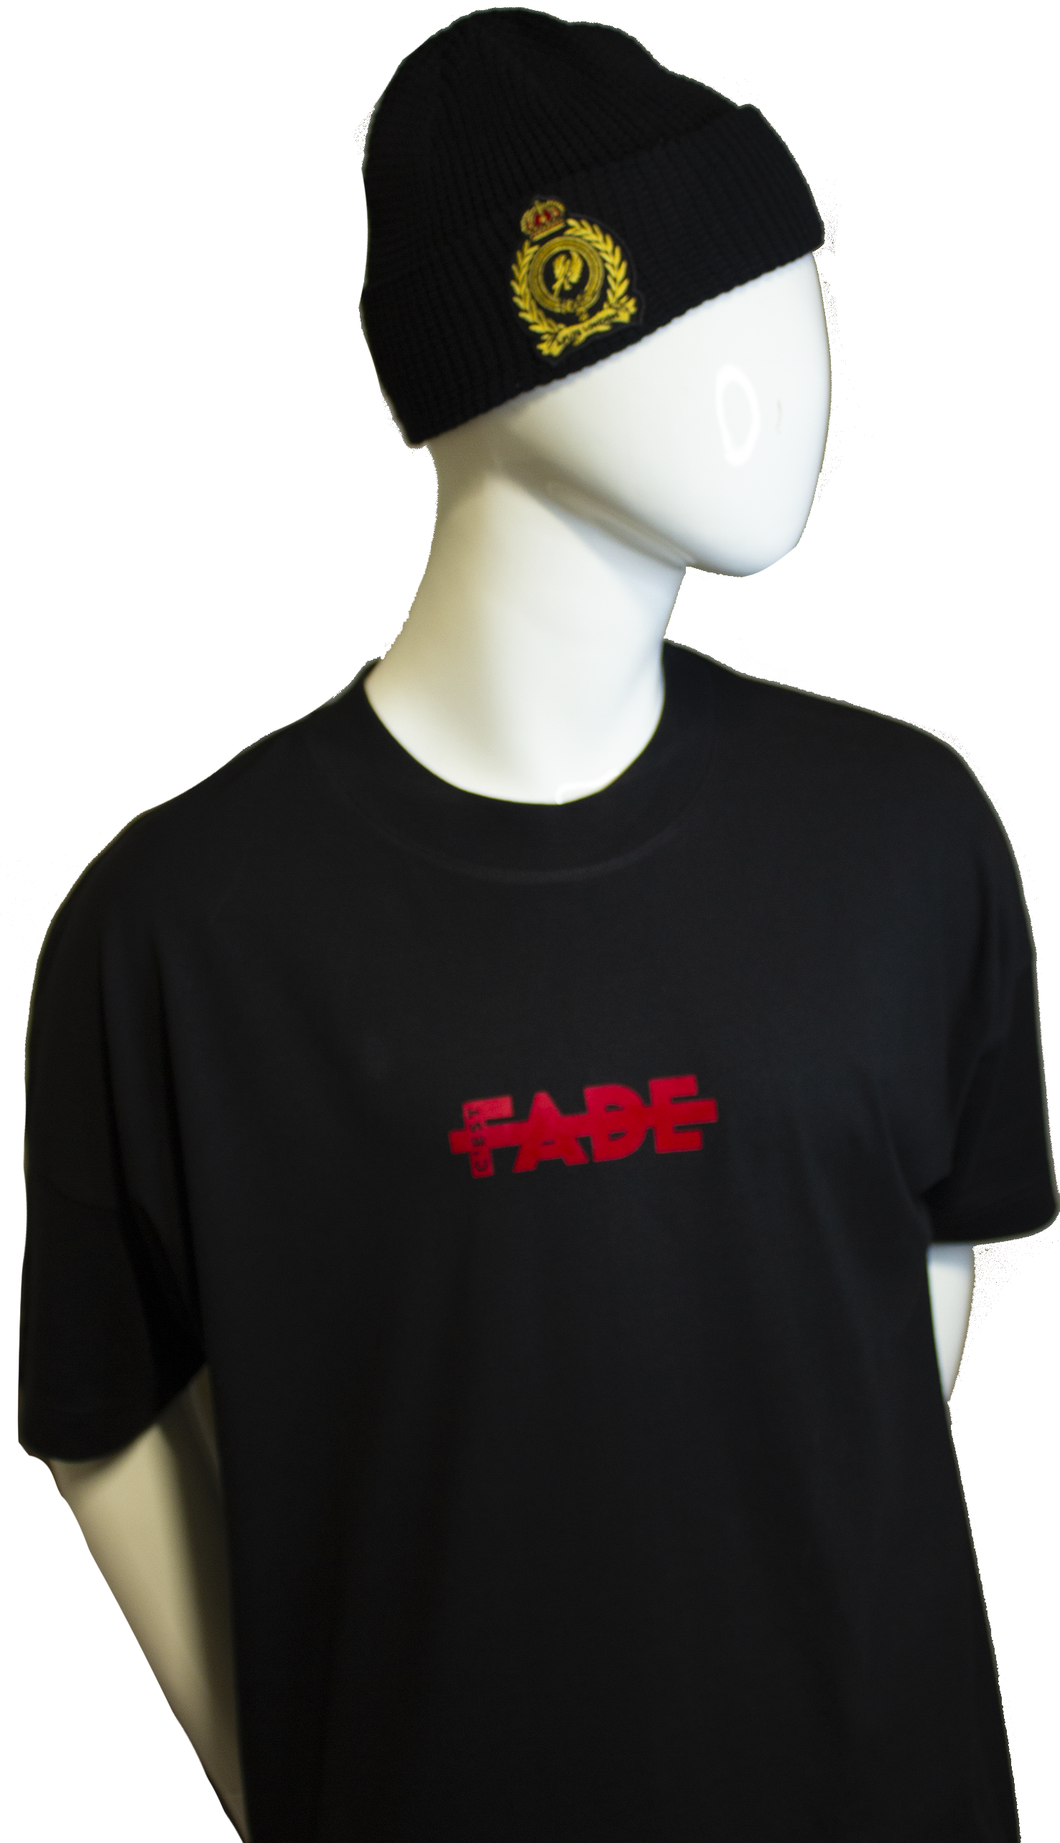 Cestfade small logo print on Black oversized T-shirt Red print